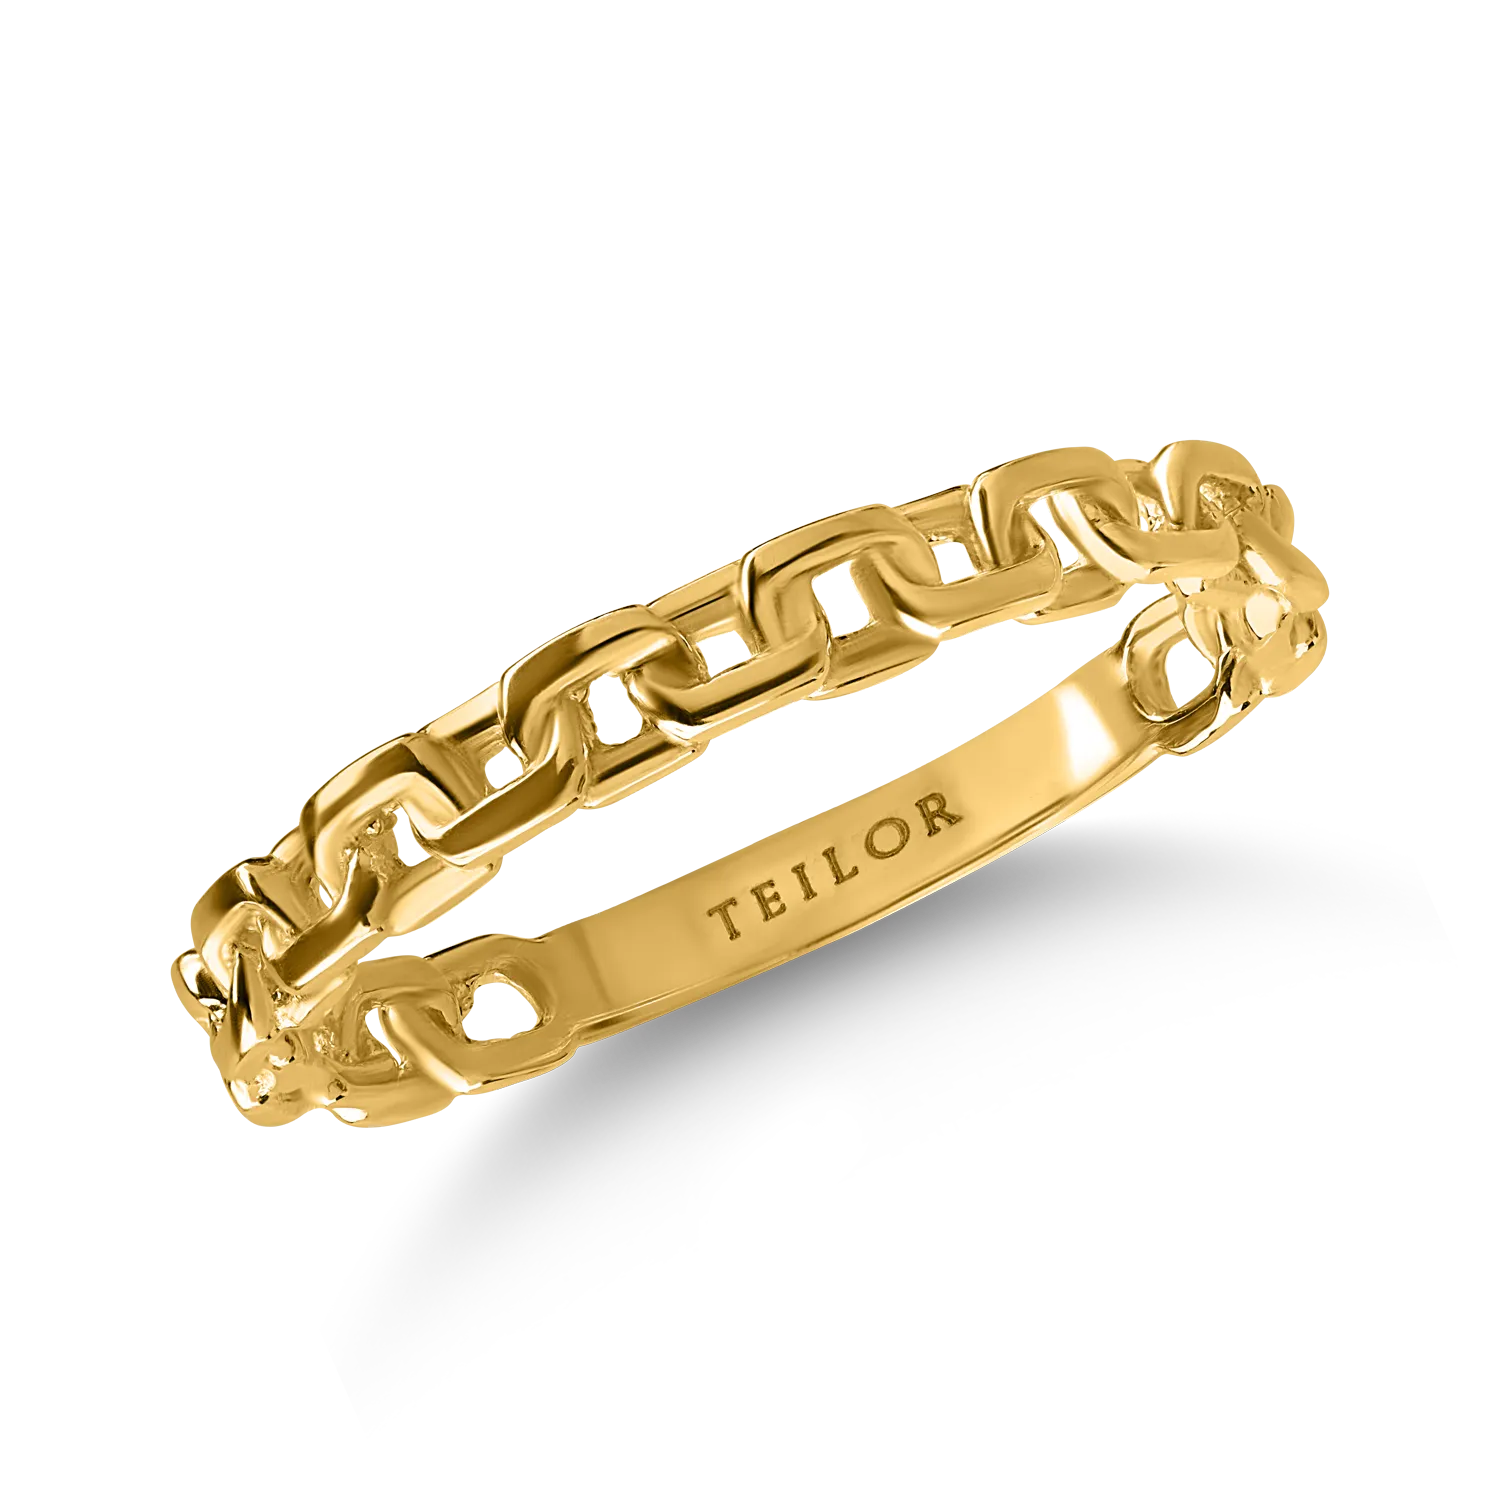 Yellow gold braided ring